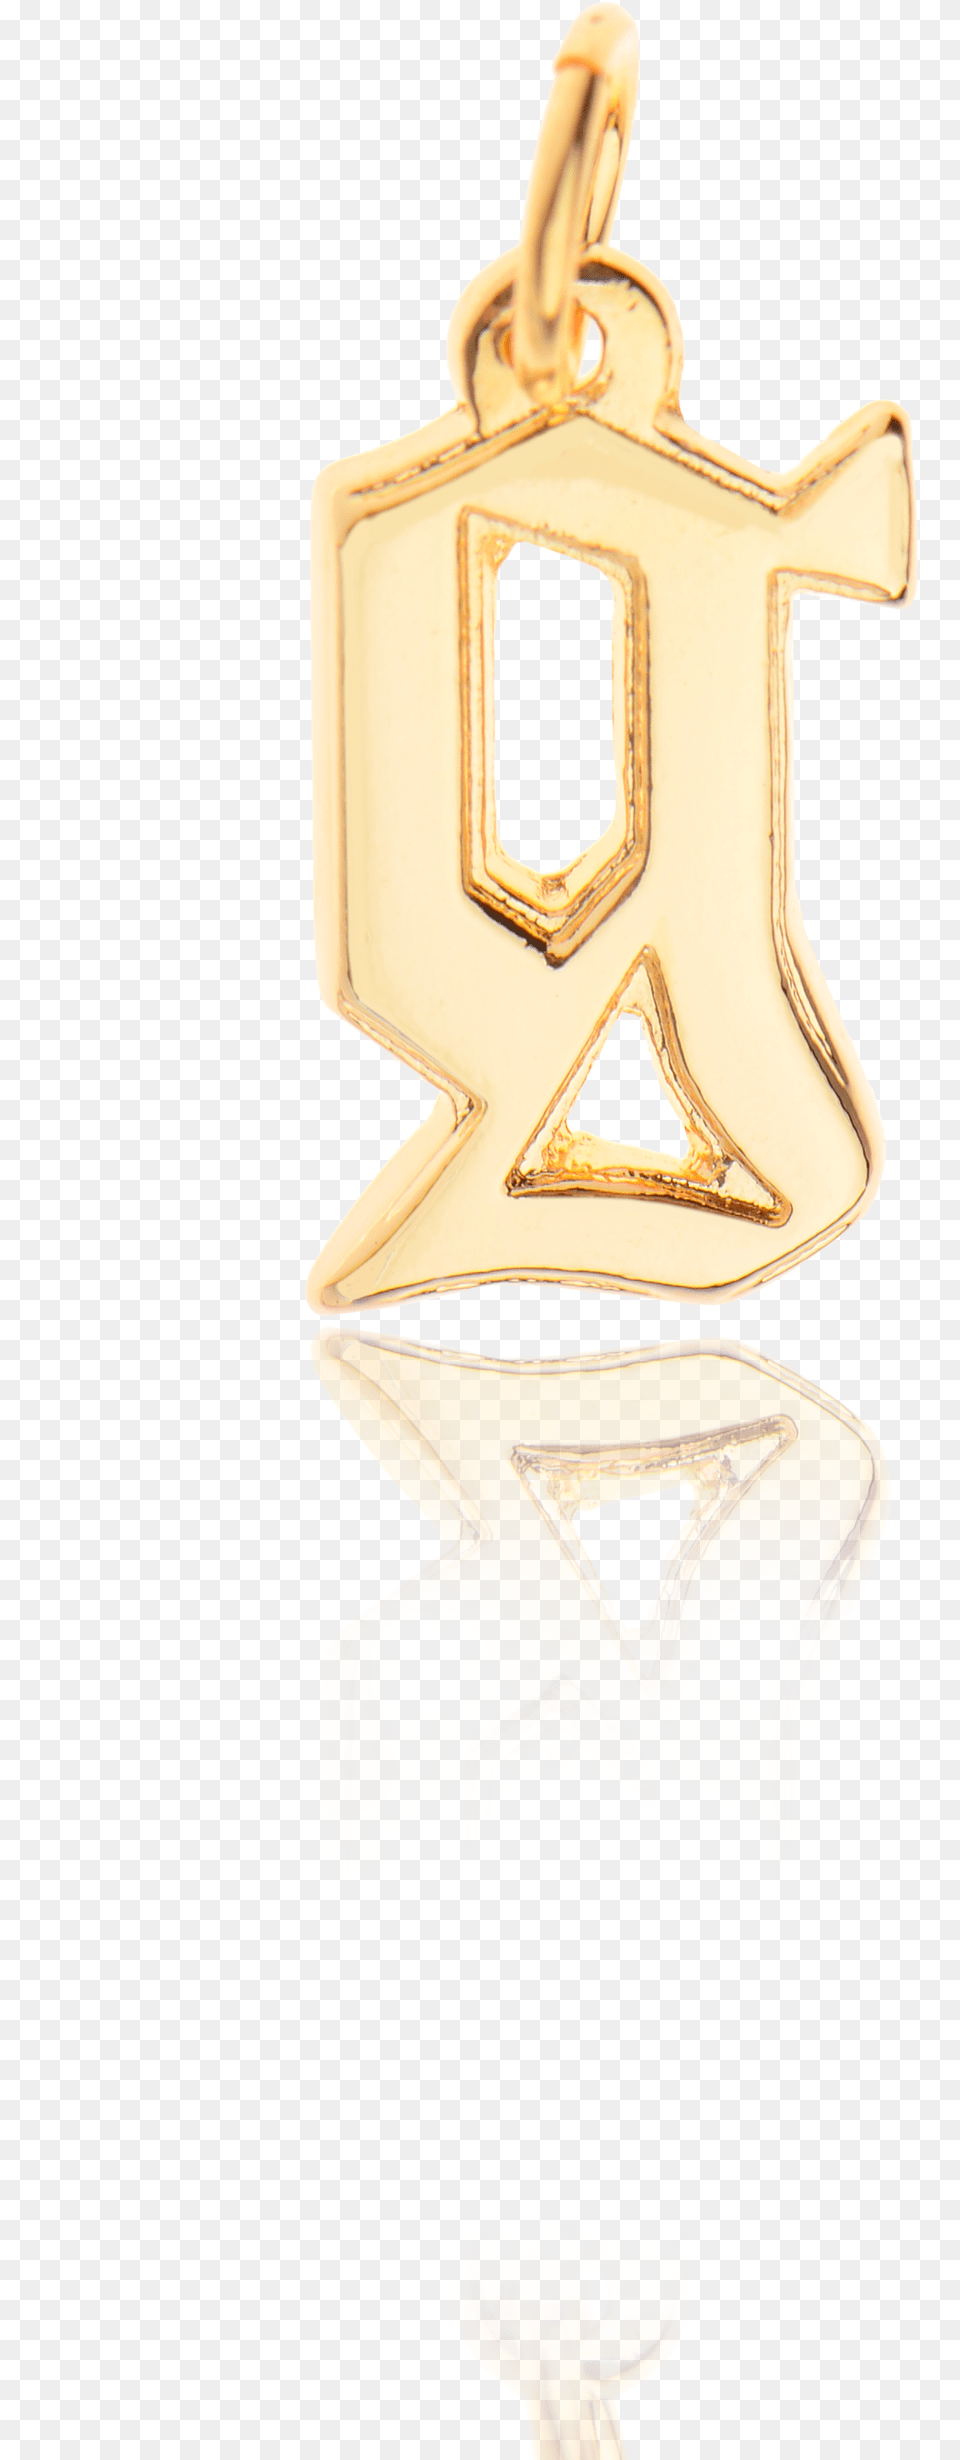 Transparent Corrente De Ouro Emblem, Accessories, Earring, Jewelry, Pendant Png Image